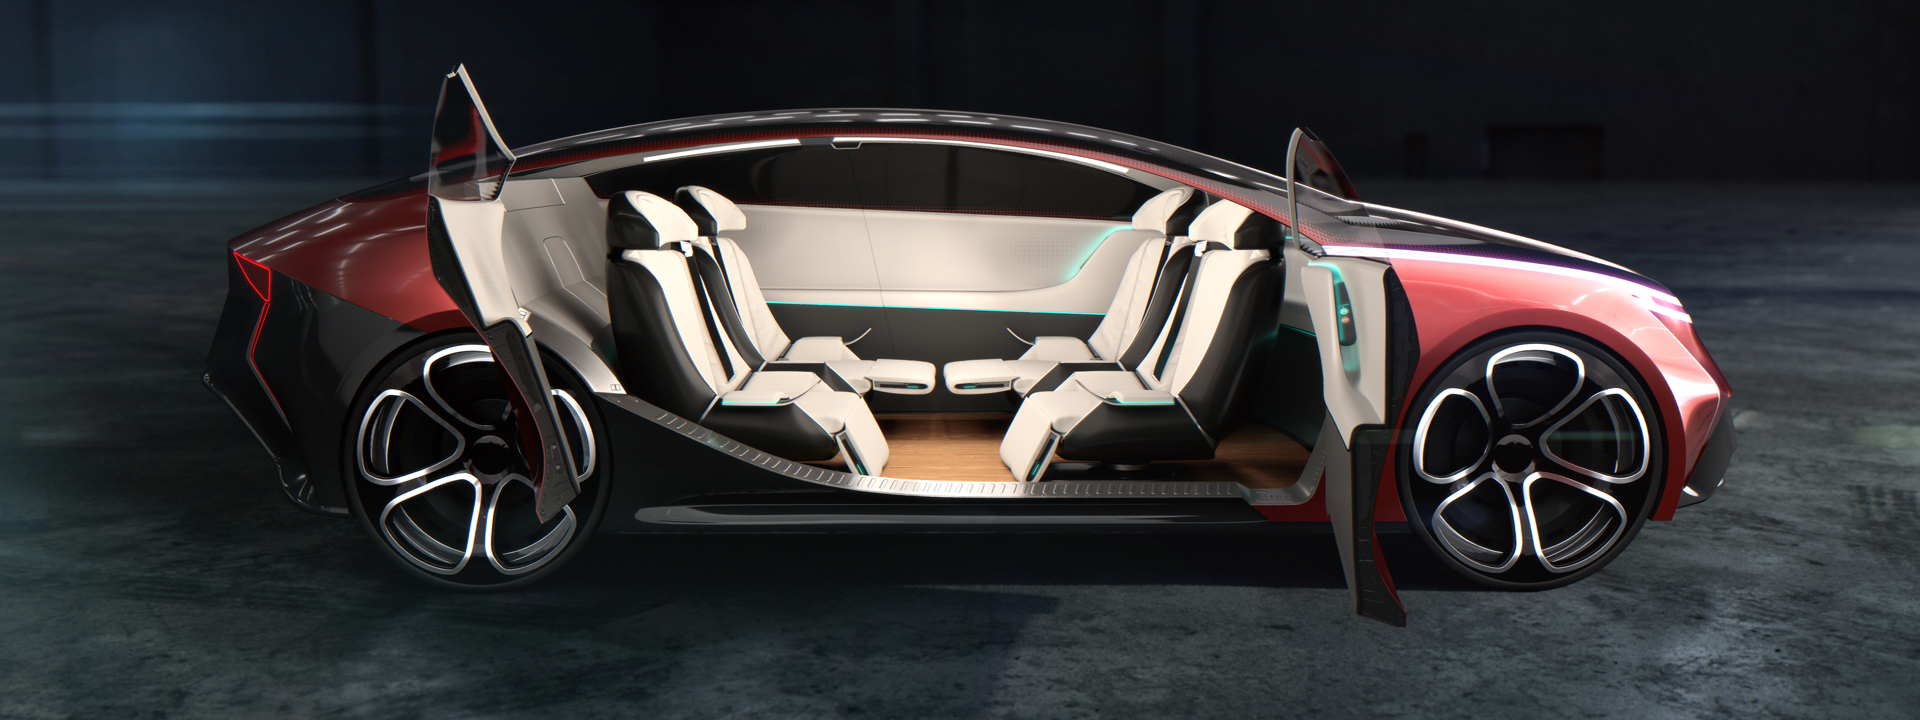 Ferchau Concept Car